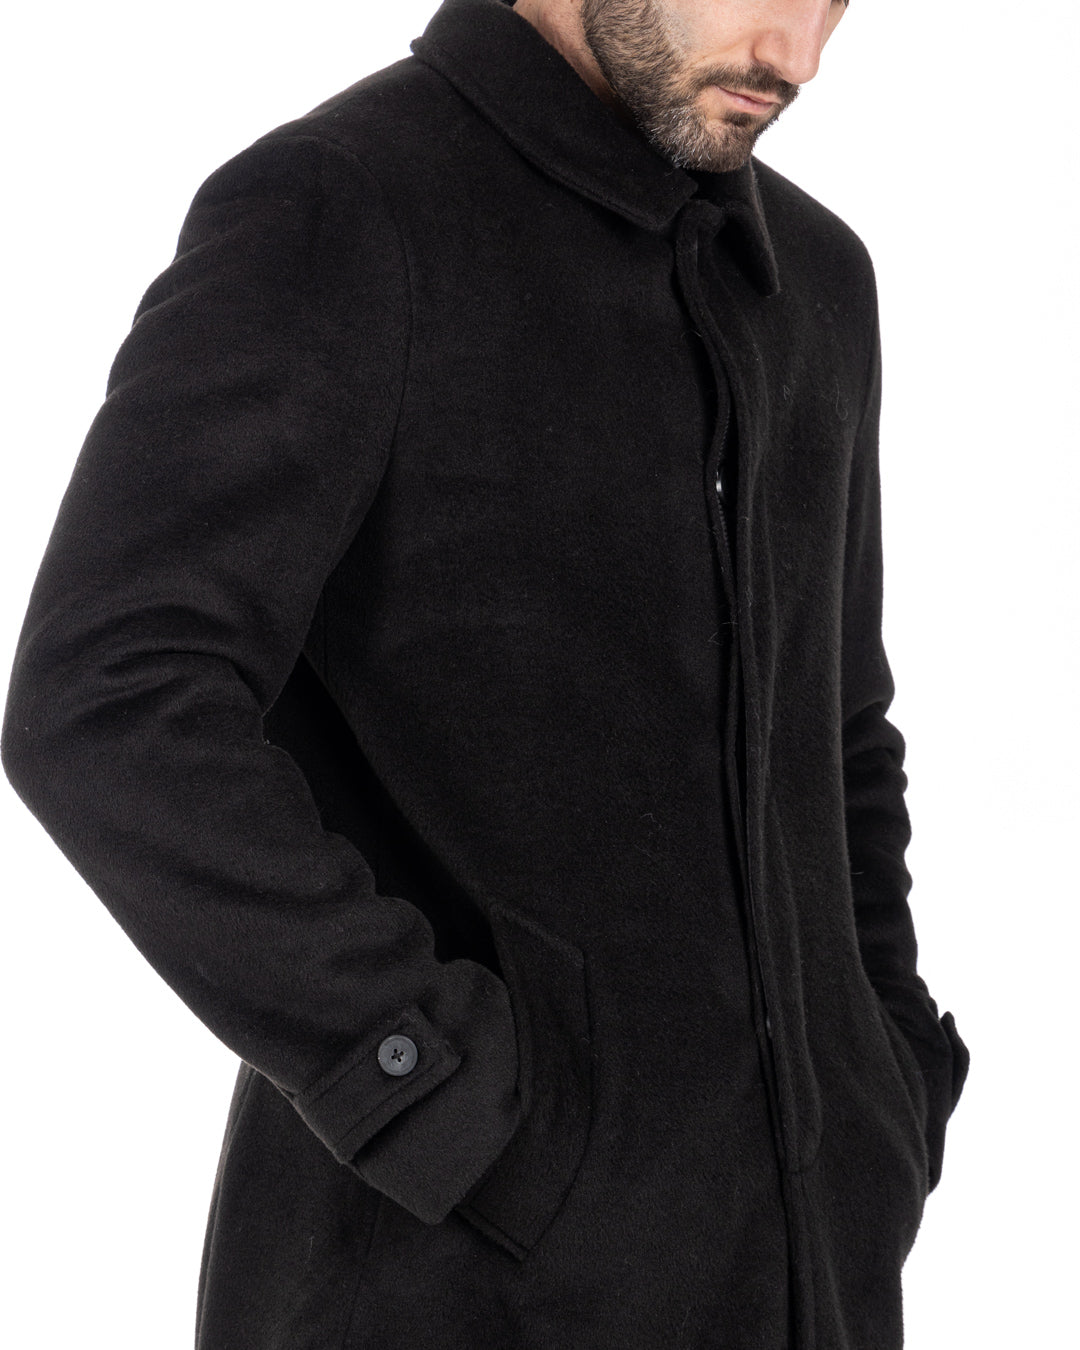 Jean - black single-breasted coat